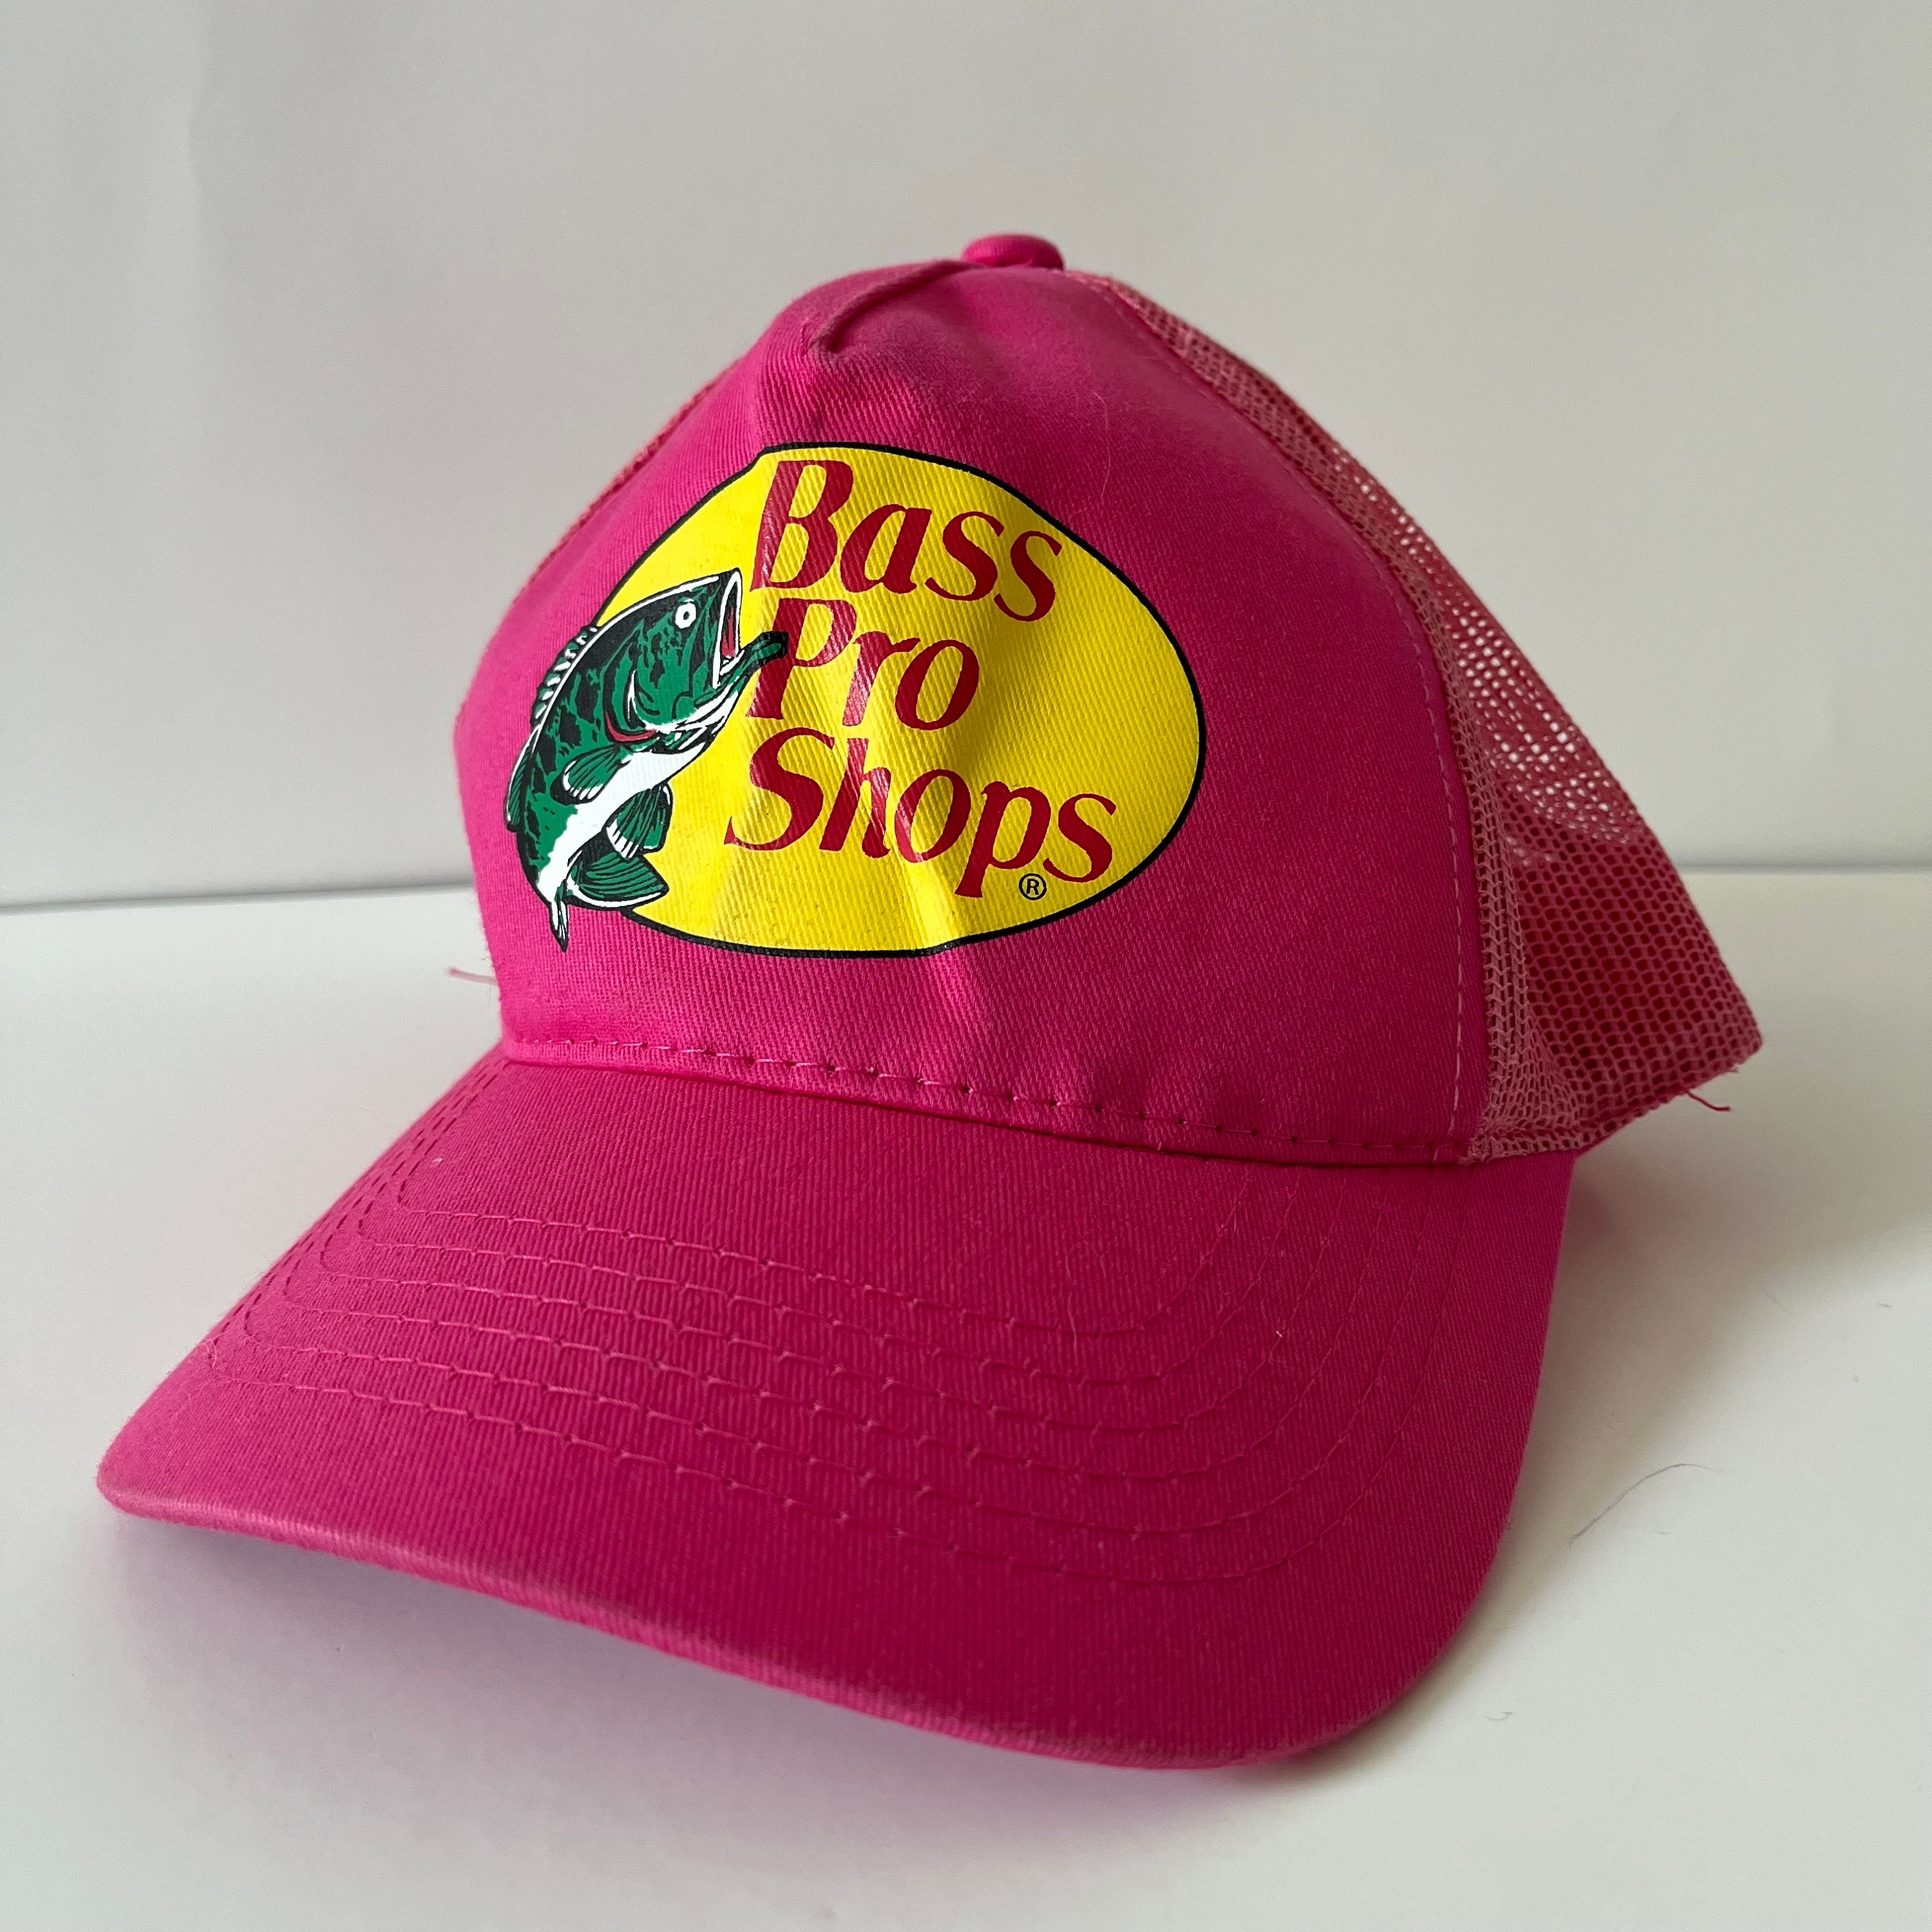 Vintage Bass Pro Shop Mesh Trucker Hat Adjustable Baseball Cap One Size Pink